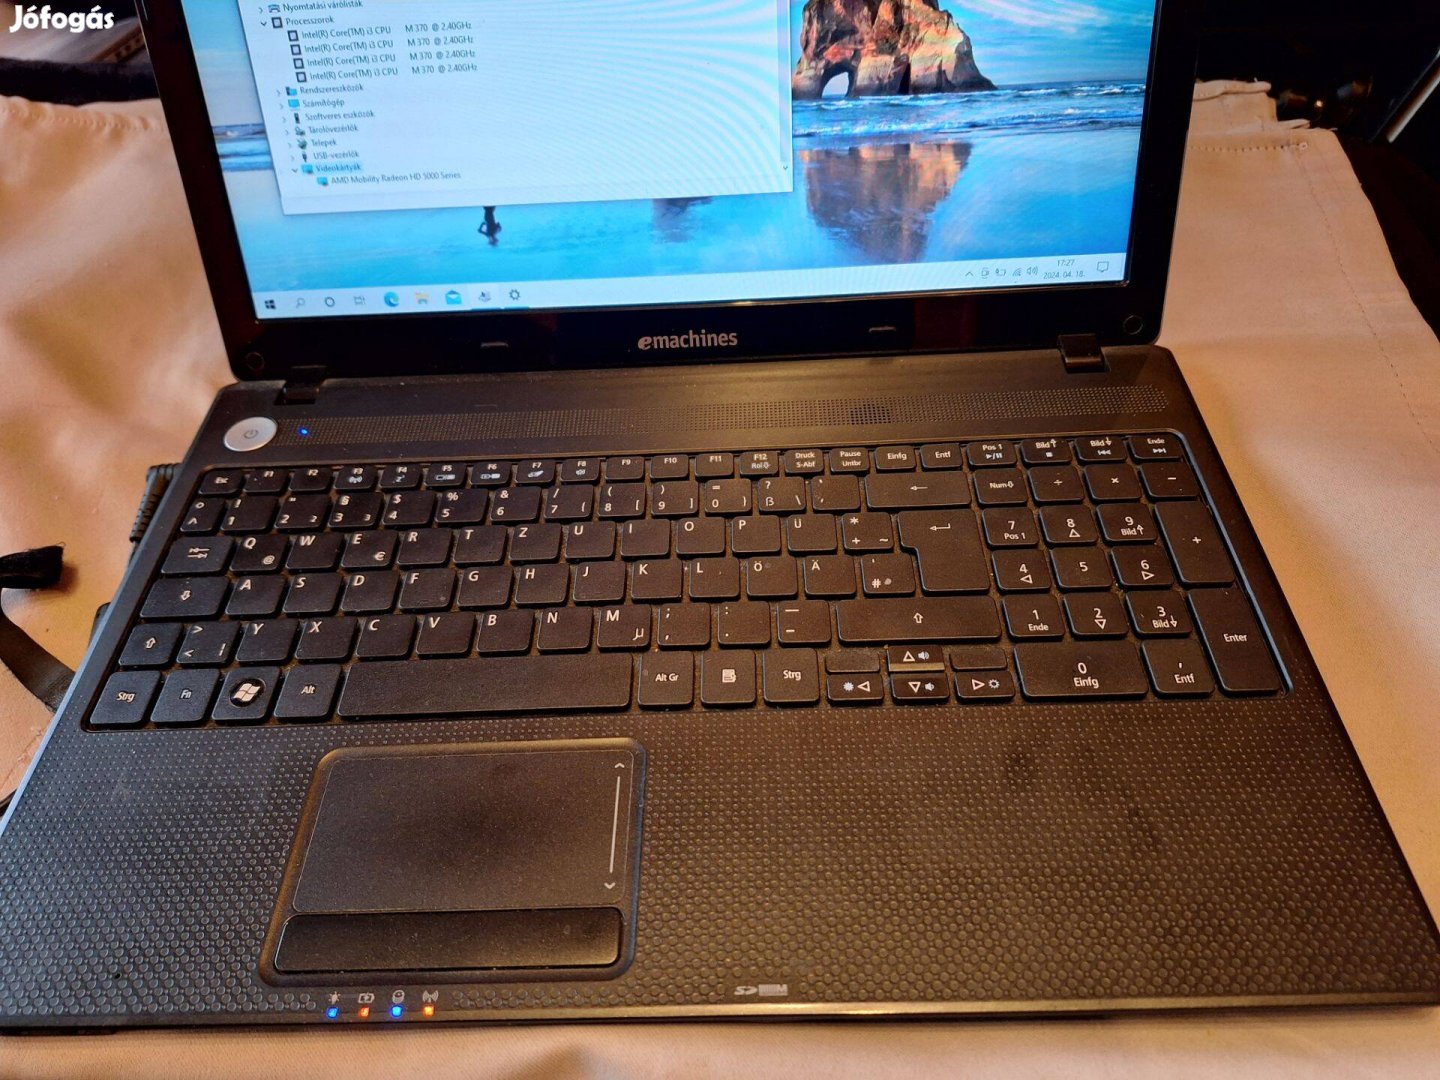 Eladó Acer emachines E732 i3 ,4GB Ram ,HDD 320Gb 15,6" Laptop